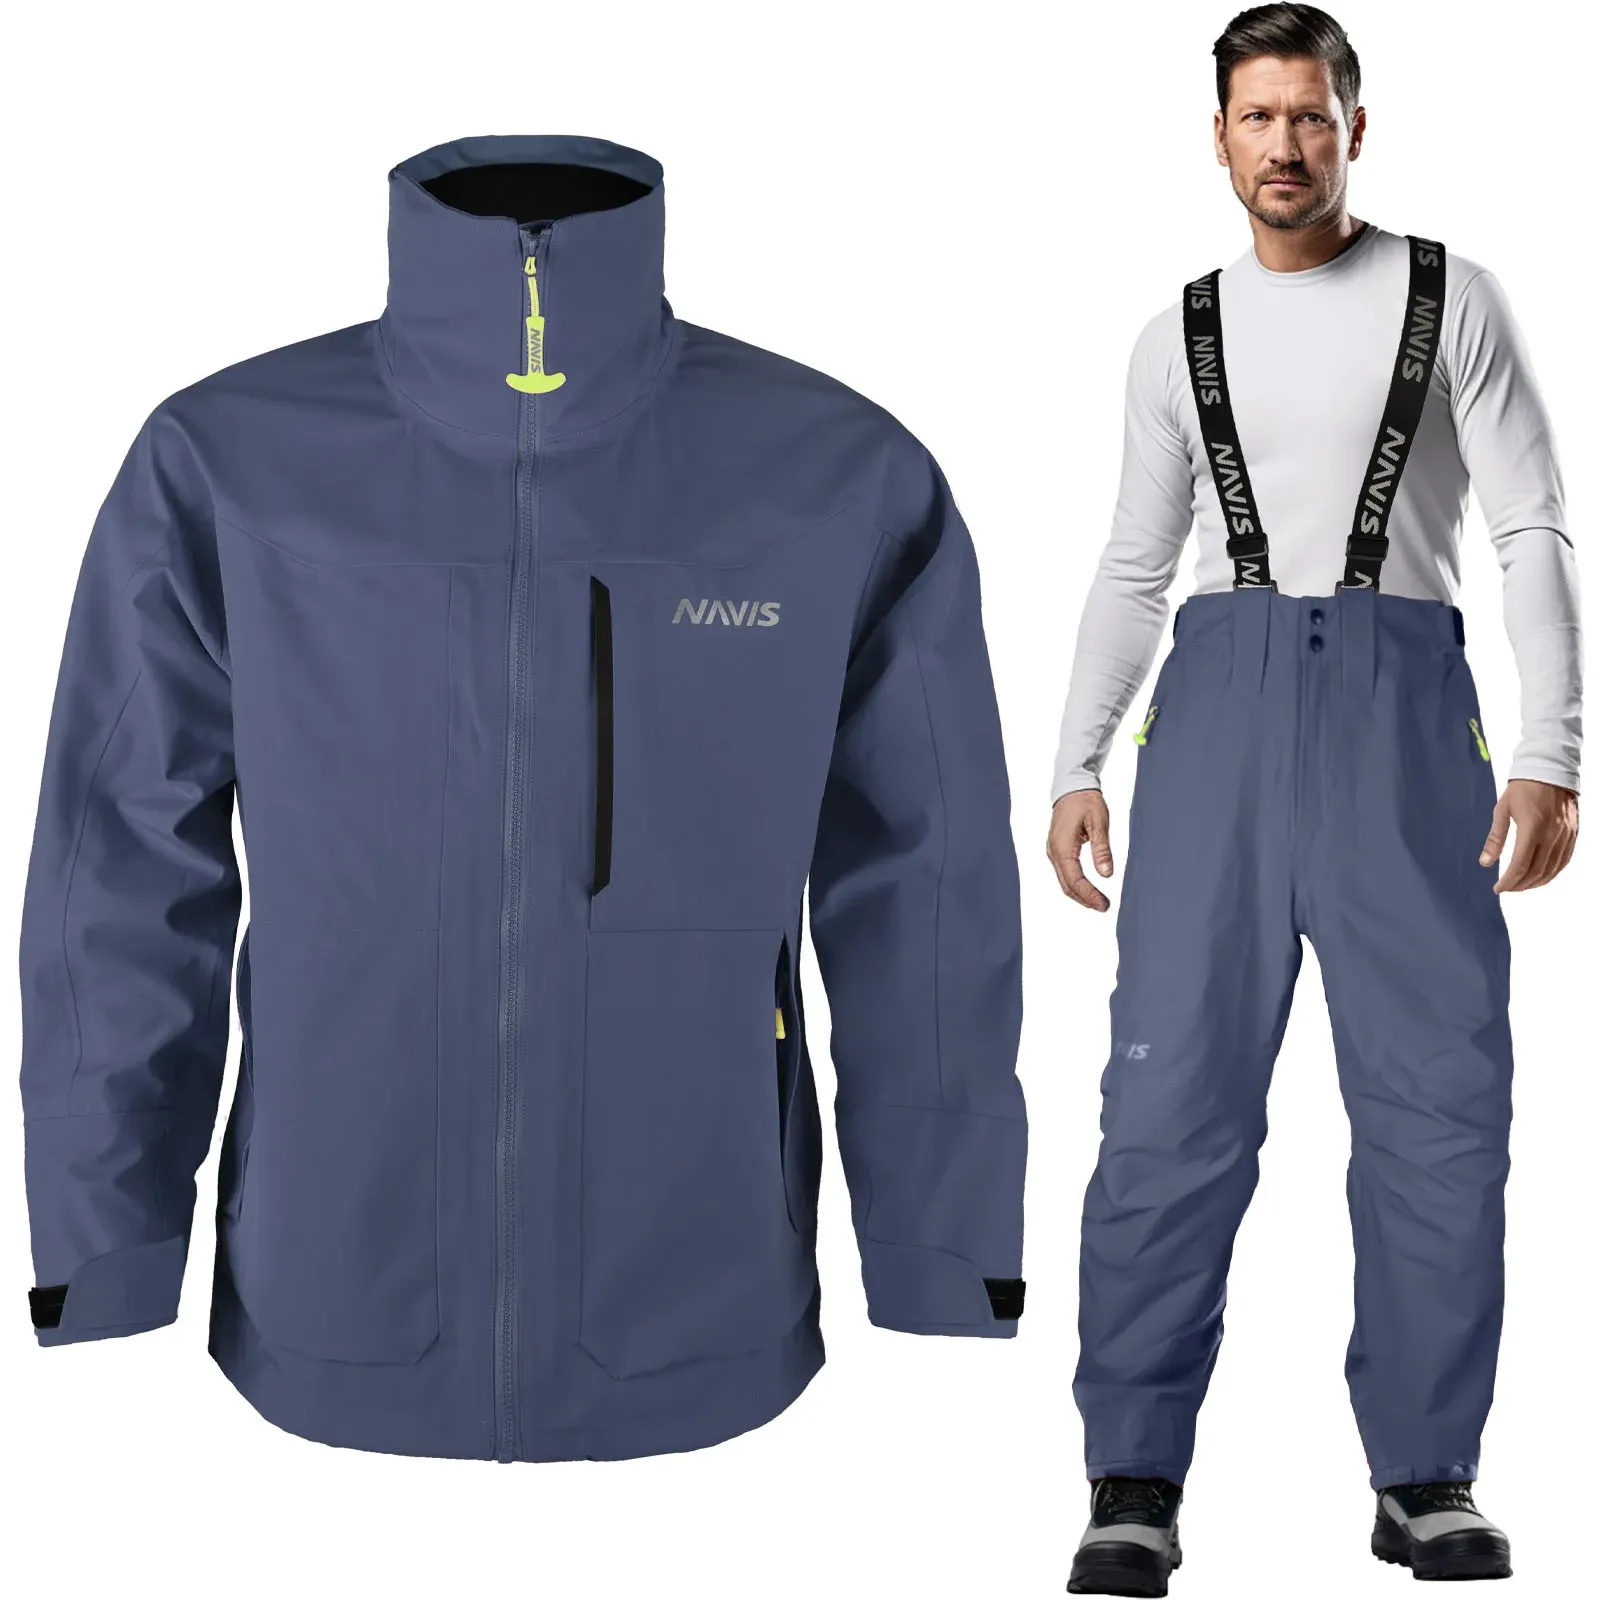 Extreme Dry 3 layer Fishing Jacket with Bib Pants Combo Suit Fishing Rain Gear